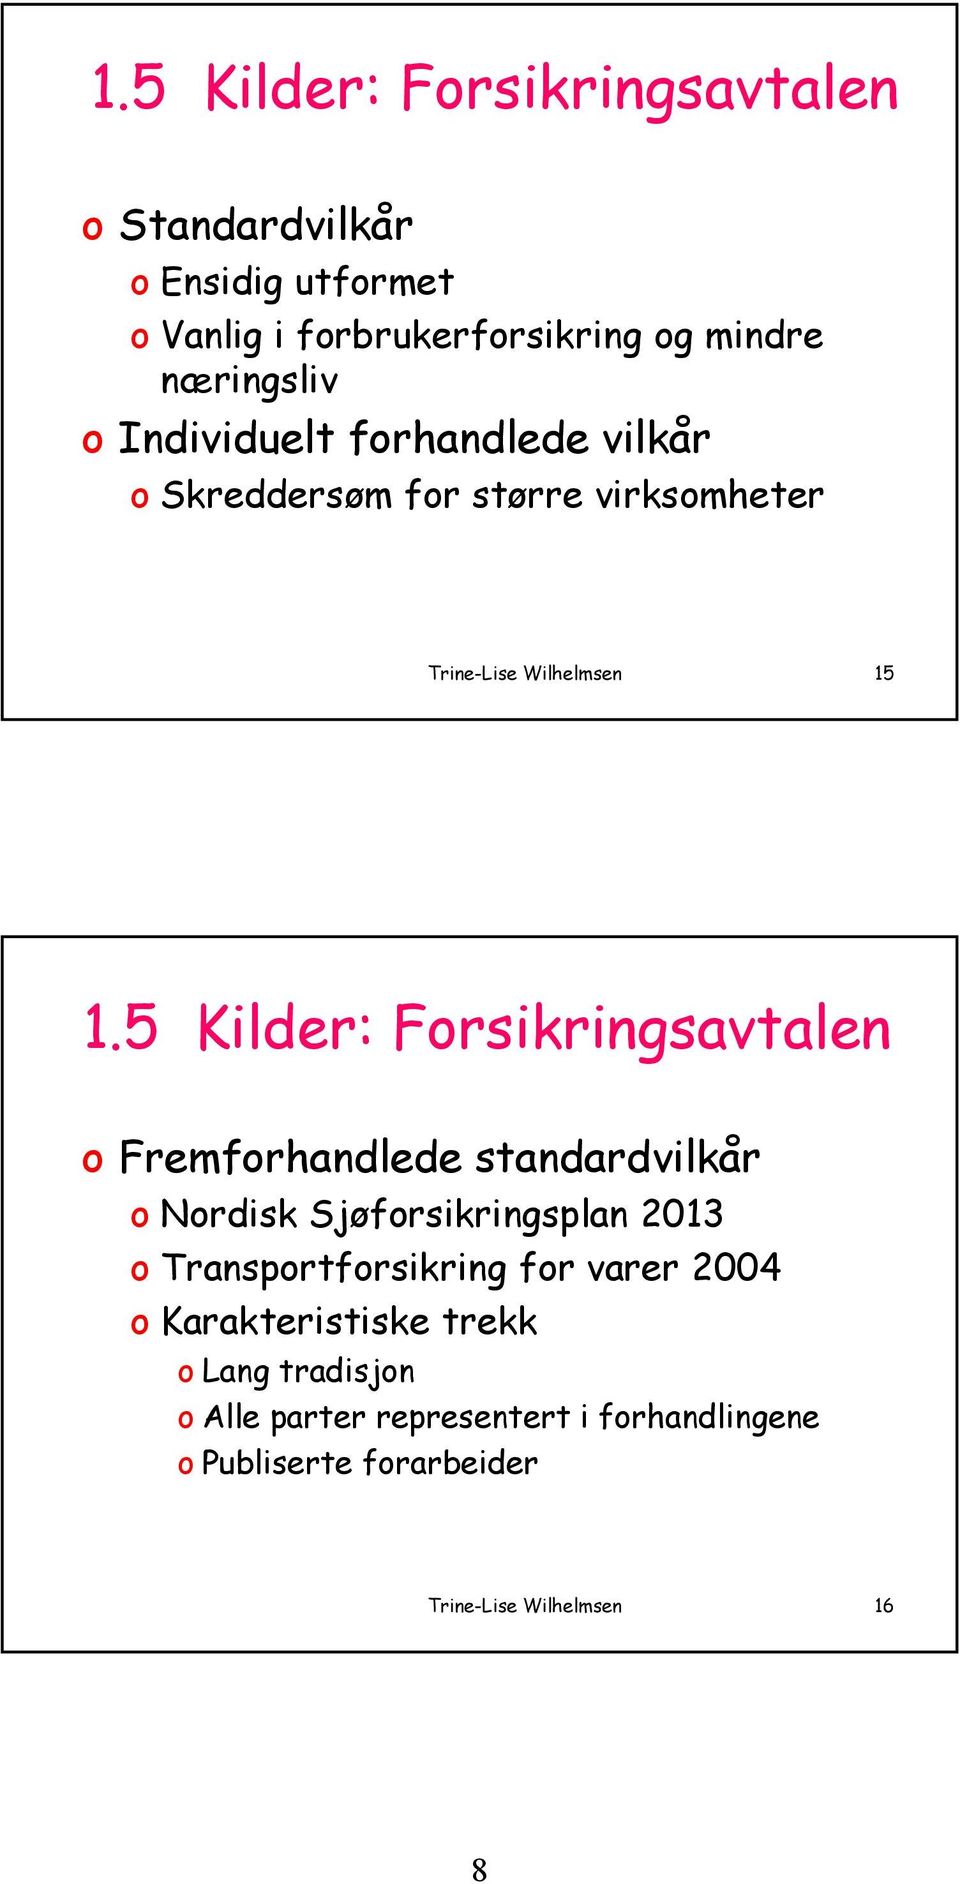 5 Kilder: Forsikringsavtalen o Fremforhandlede standardvilkår o Nordisk Sjøforsikringsplan 2013 o Transportforsikring for